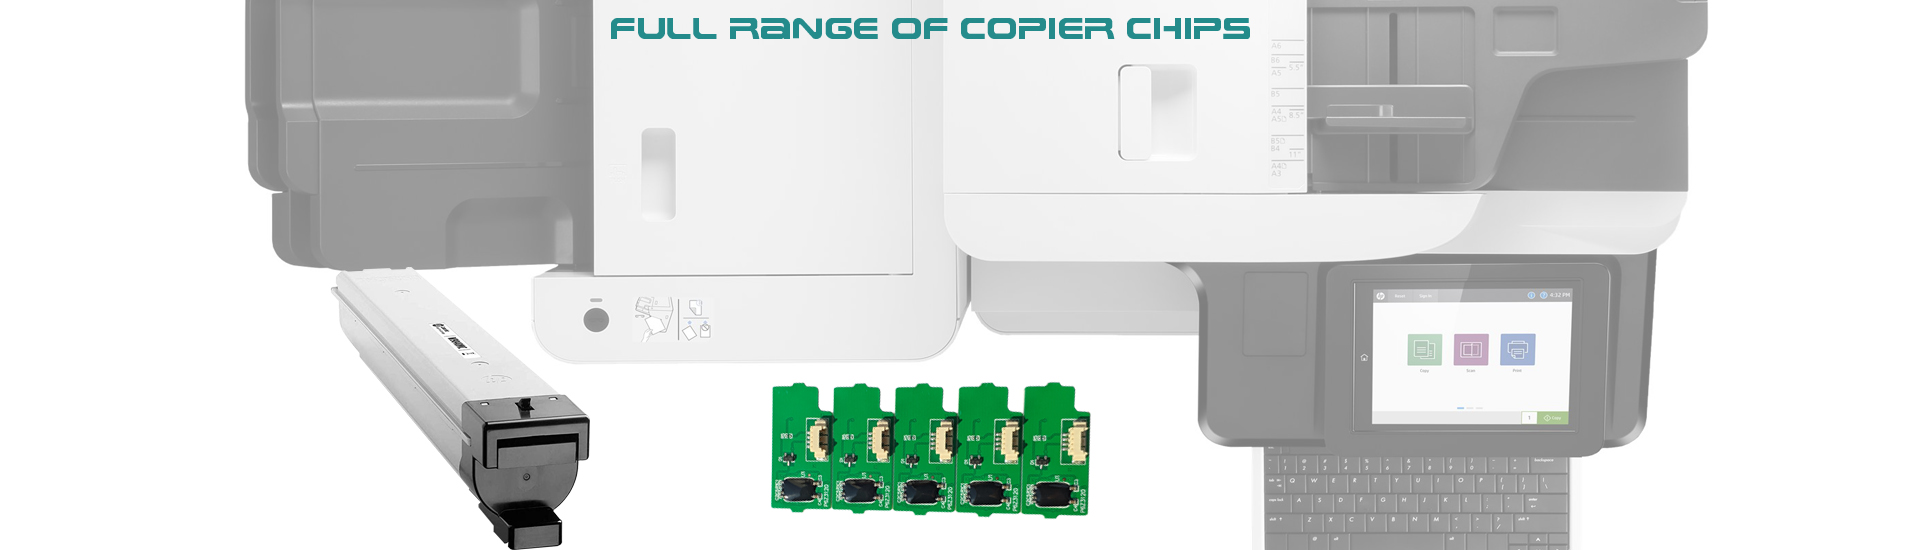 quality printer copier chips